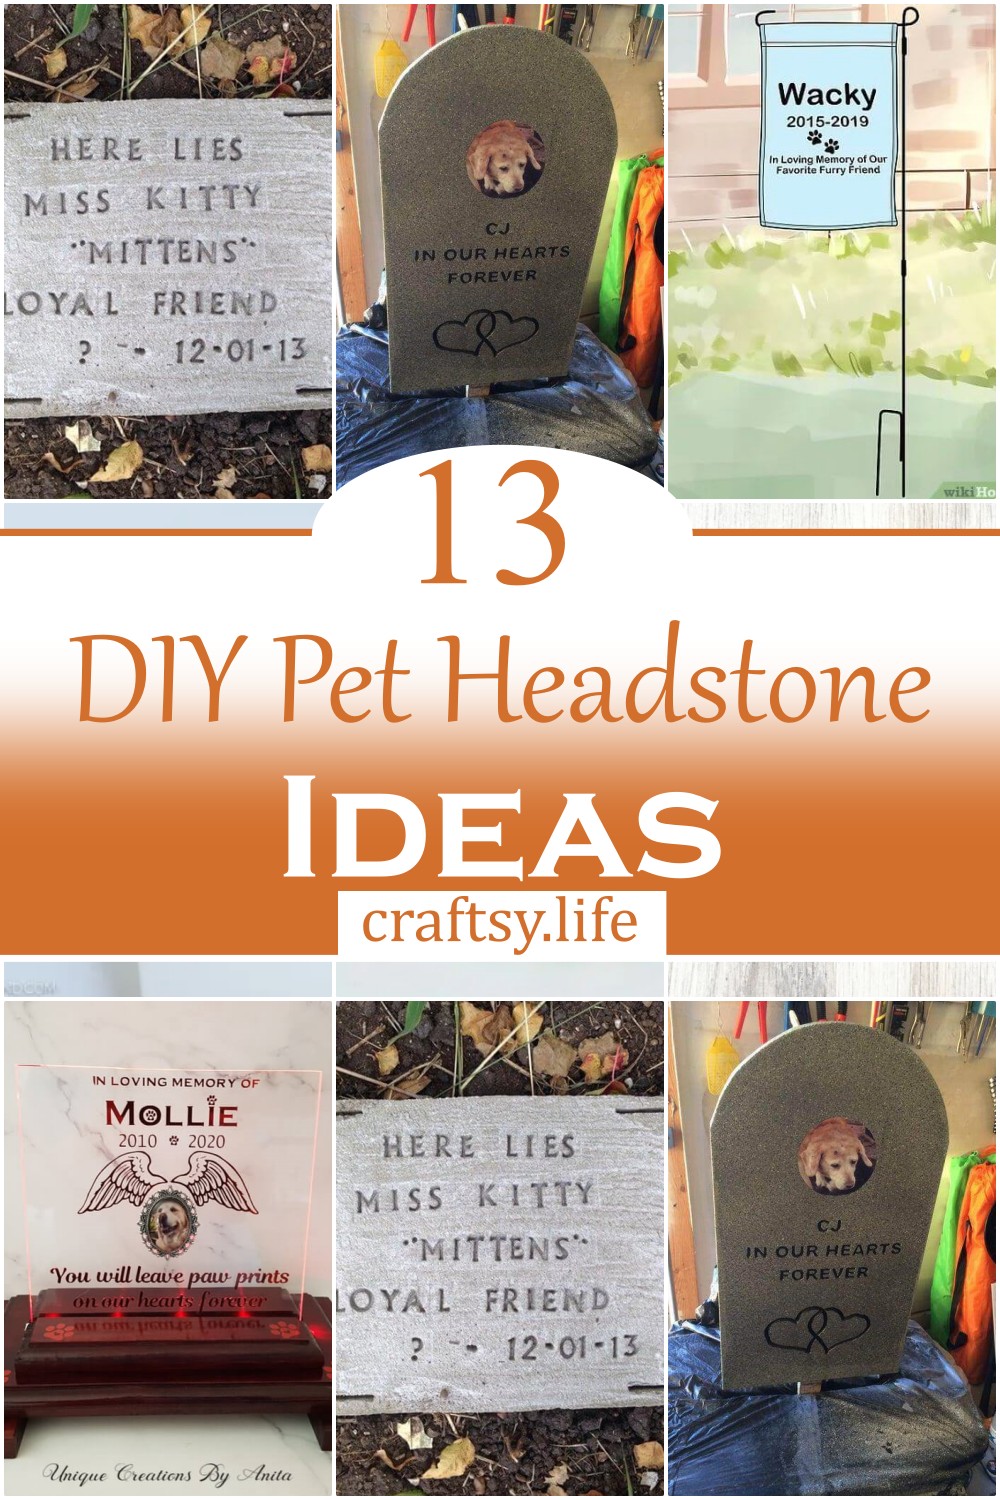 DIY Pet Headstone Ideas